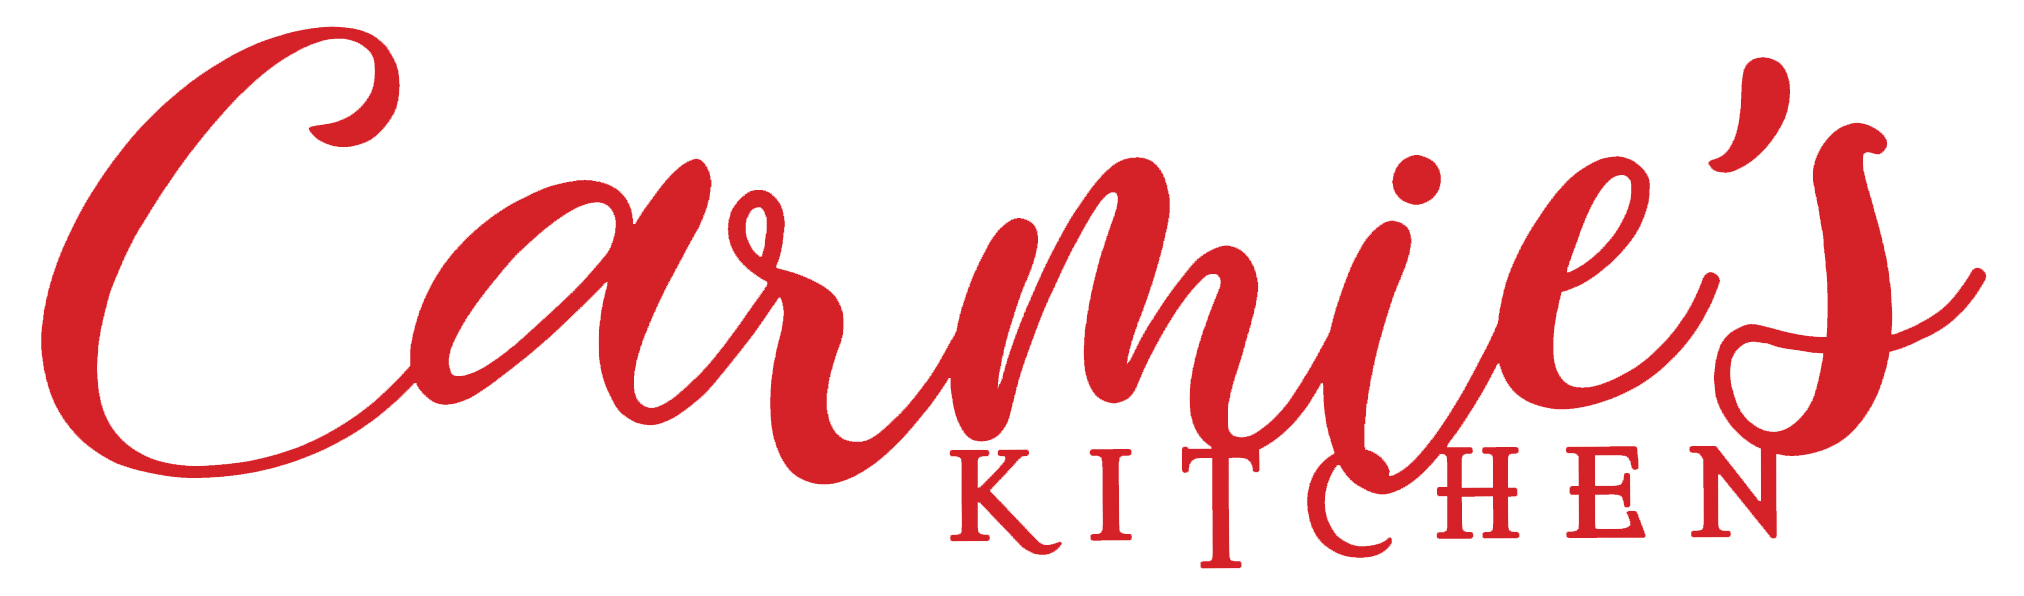 Carmie's Kitchen logo